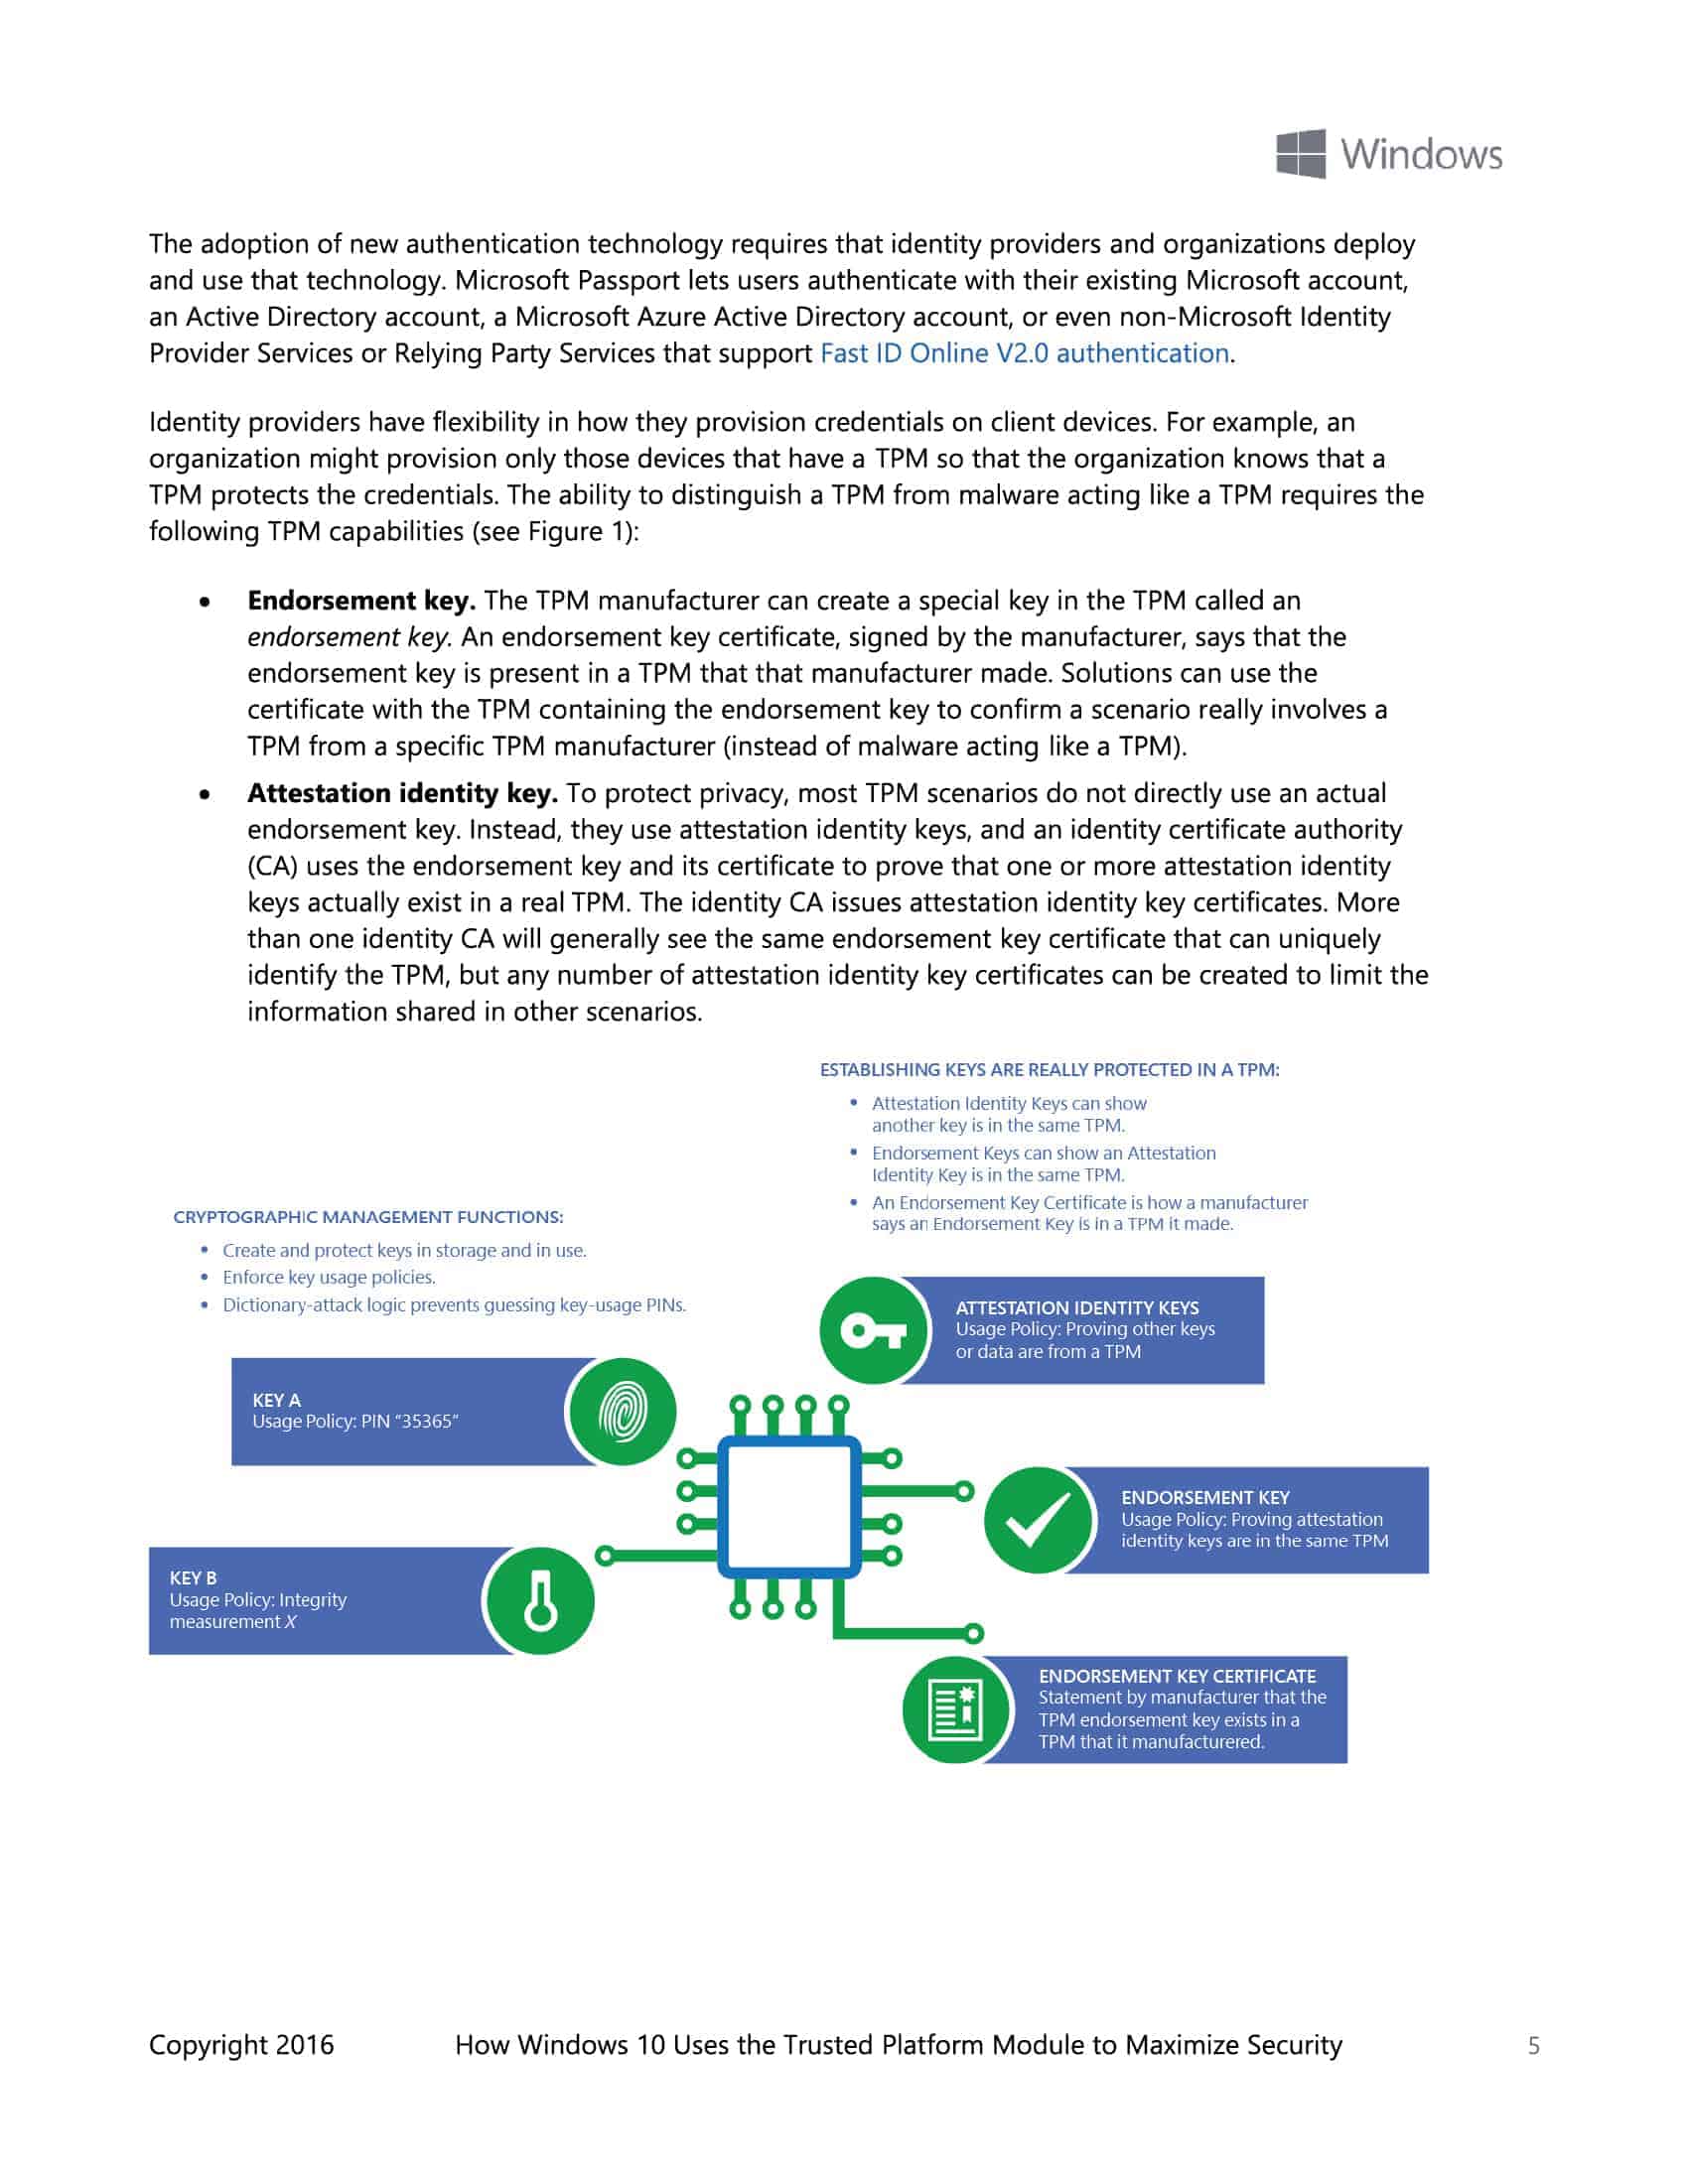 Windows 10 Trusted Platform Model (TPM) security overview